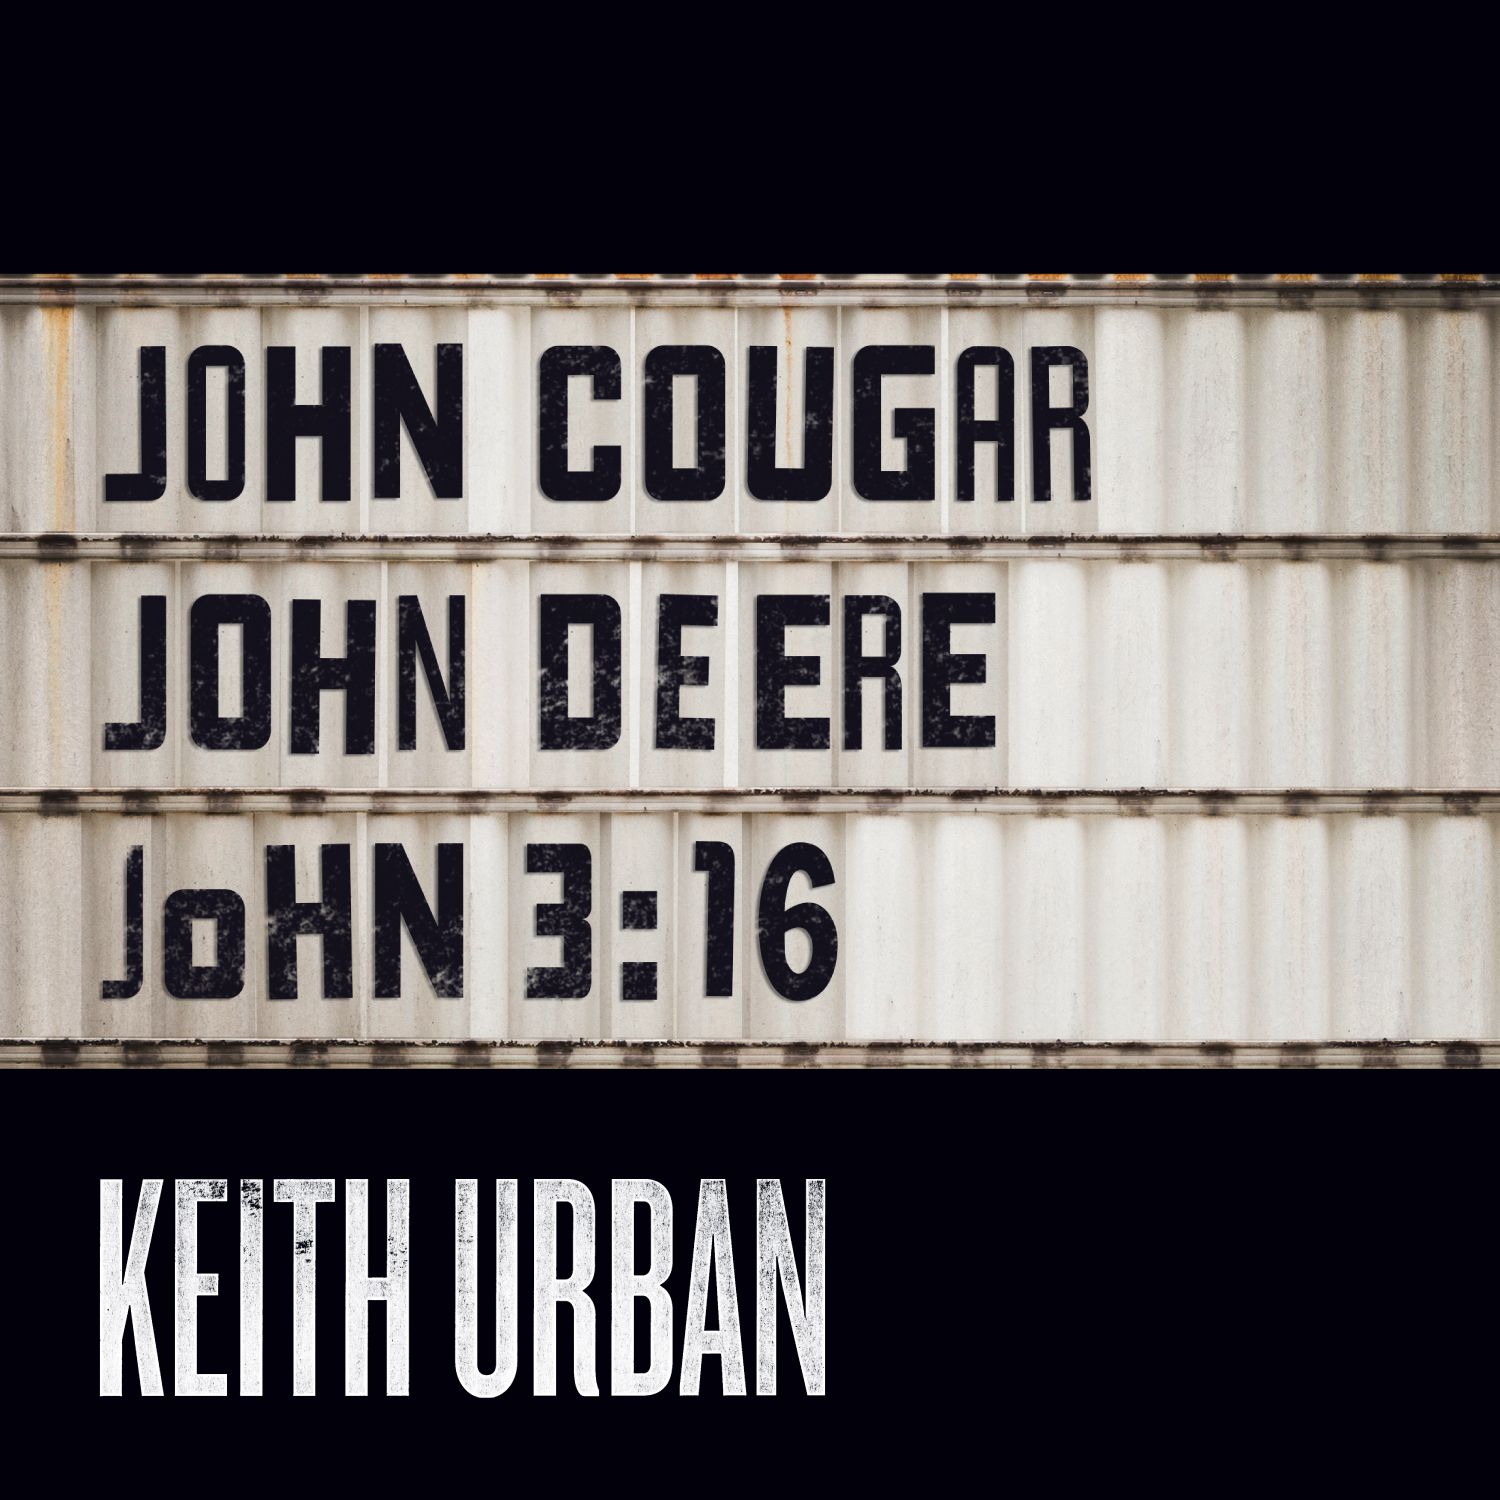 “JOHN COUGAR, JOHN DEERE, JOHN 3:16” SETS HISTORIC COUNTRY RADIO MARK